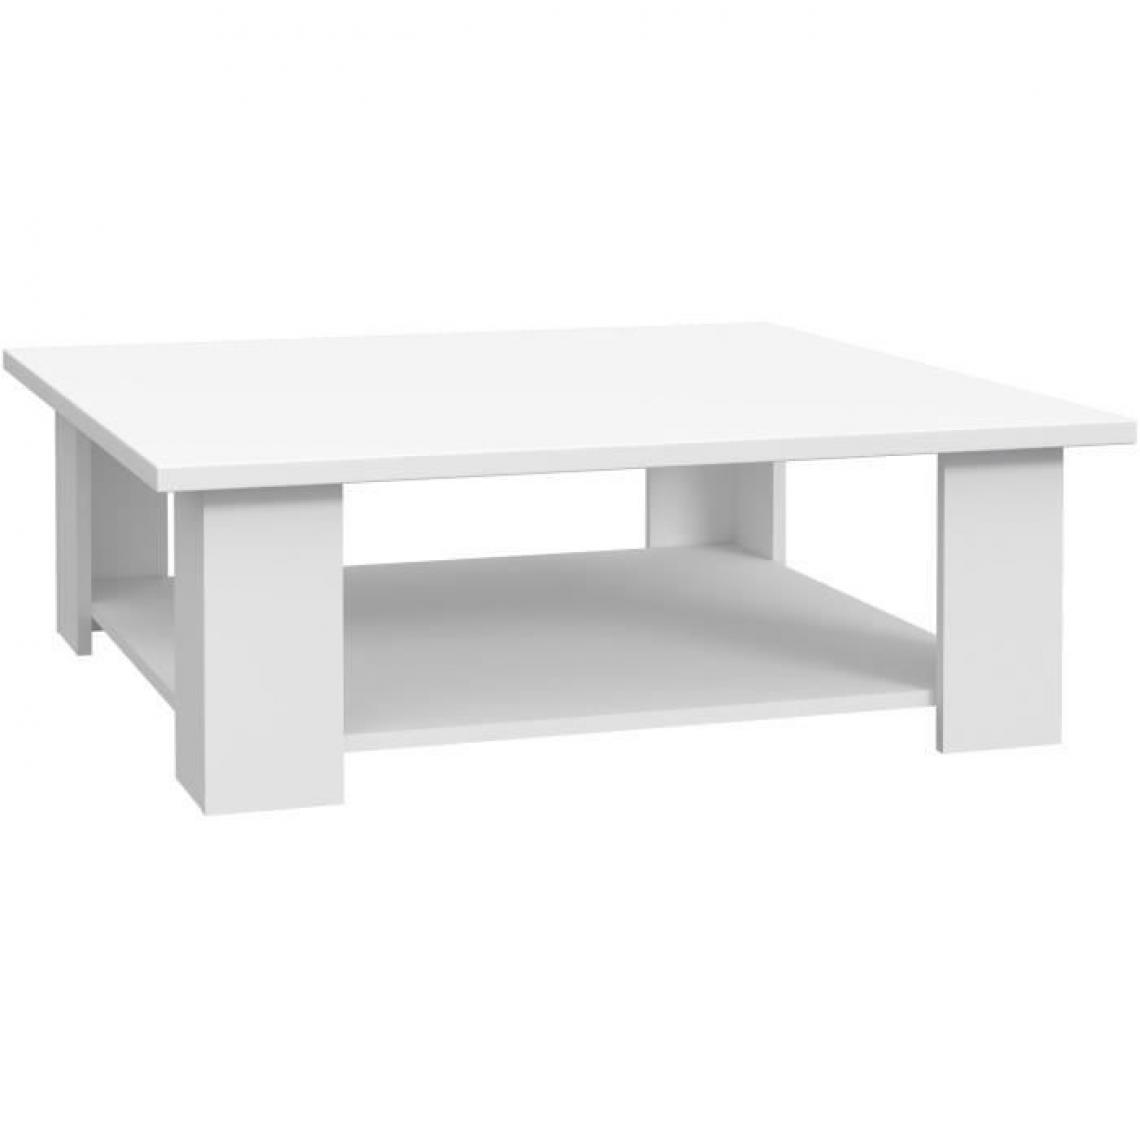 Cstore - PILVI - table basse - blanc mat - l 90xp 90xh 31 cm - Tables basses